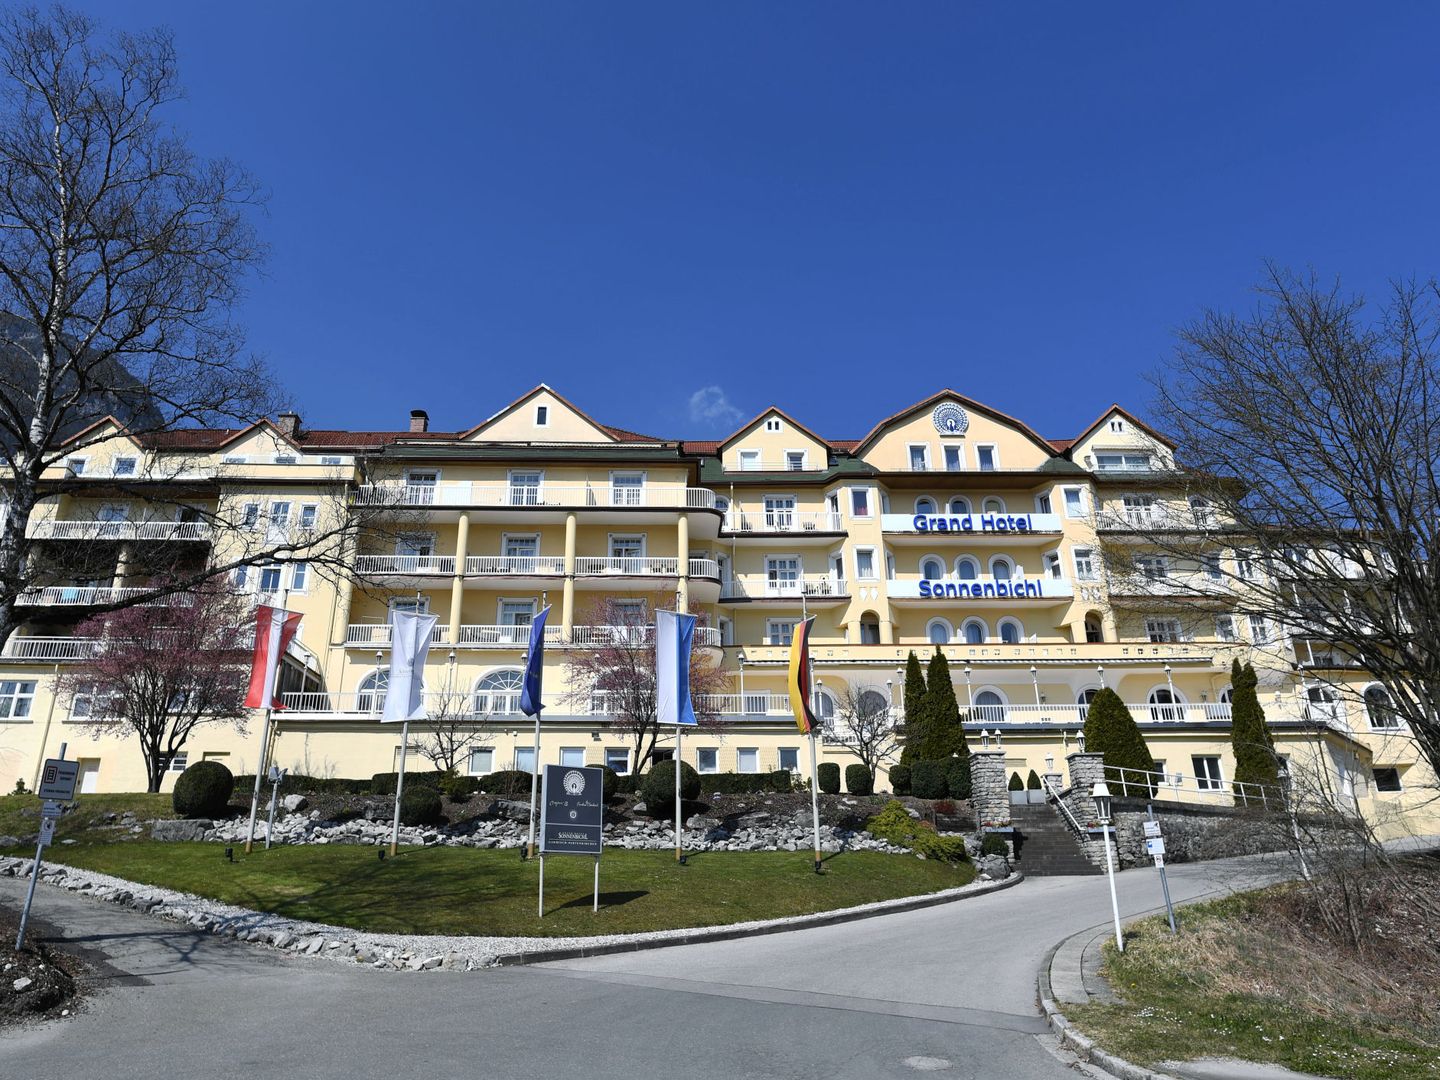 Grand Hotel Sonnenbichl, donde está hospedándose. (Reuters)